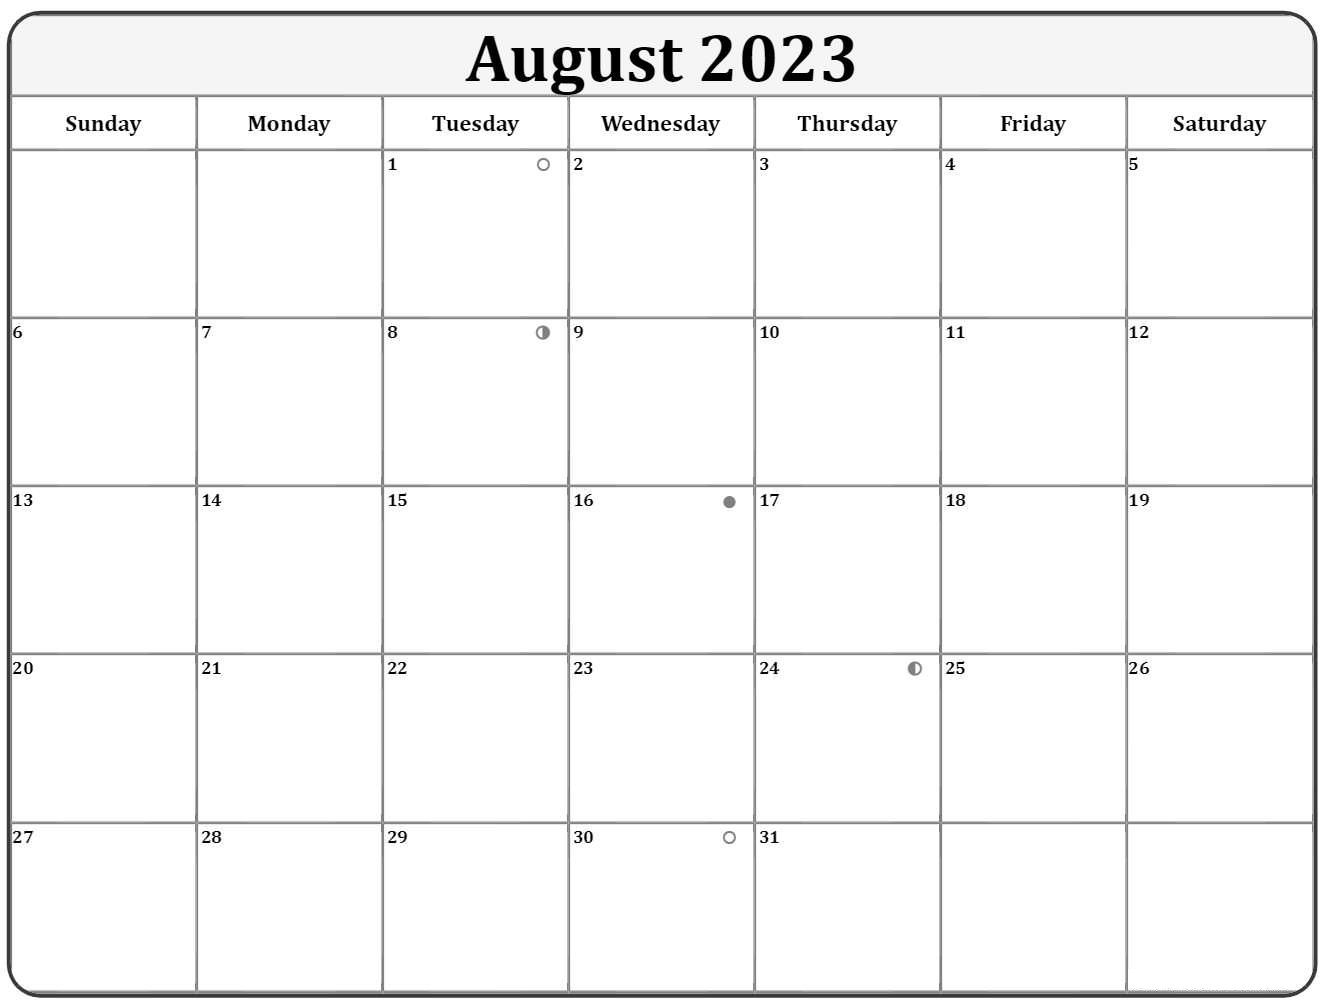 August 2023 Lunar Calendar Moon Phases